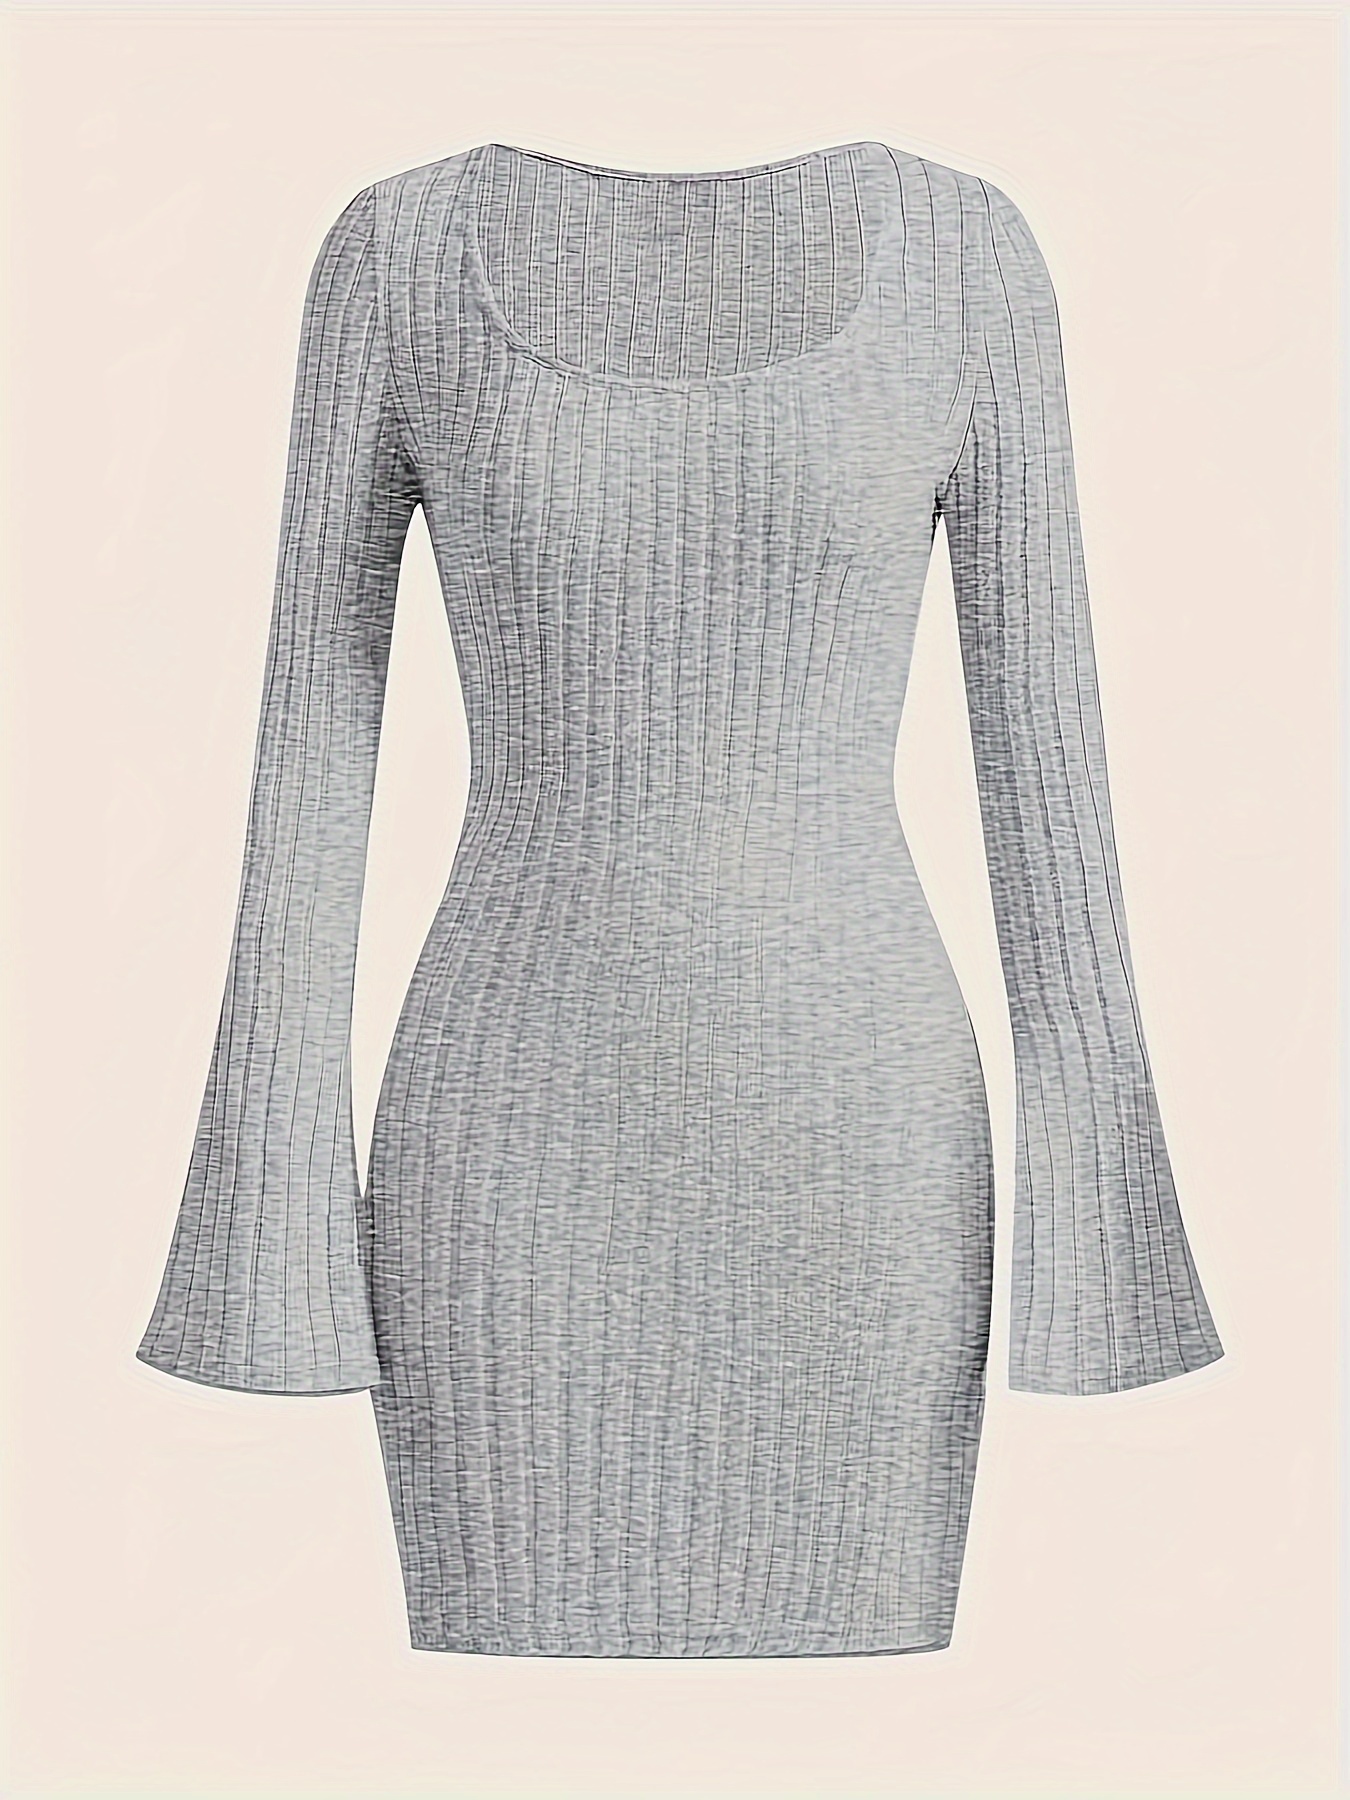 Tunic Sweatshirt Dress (Light Grey)